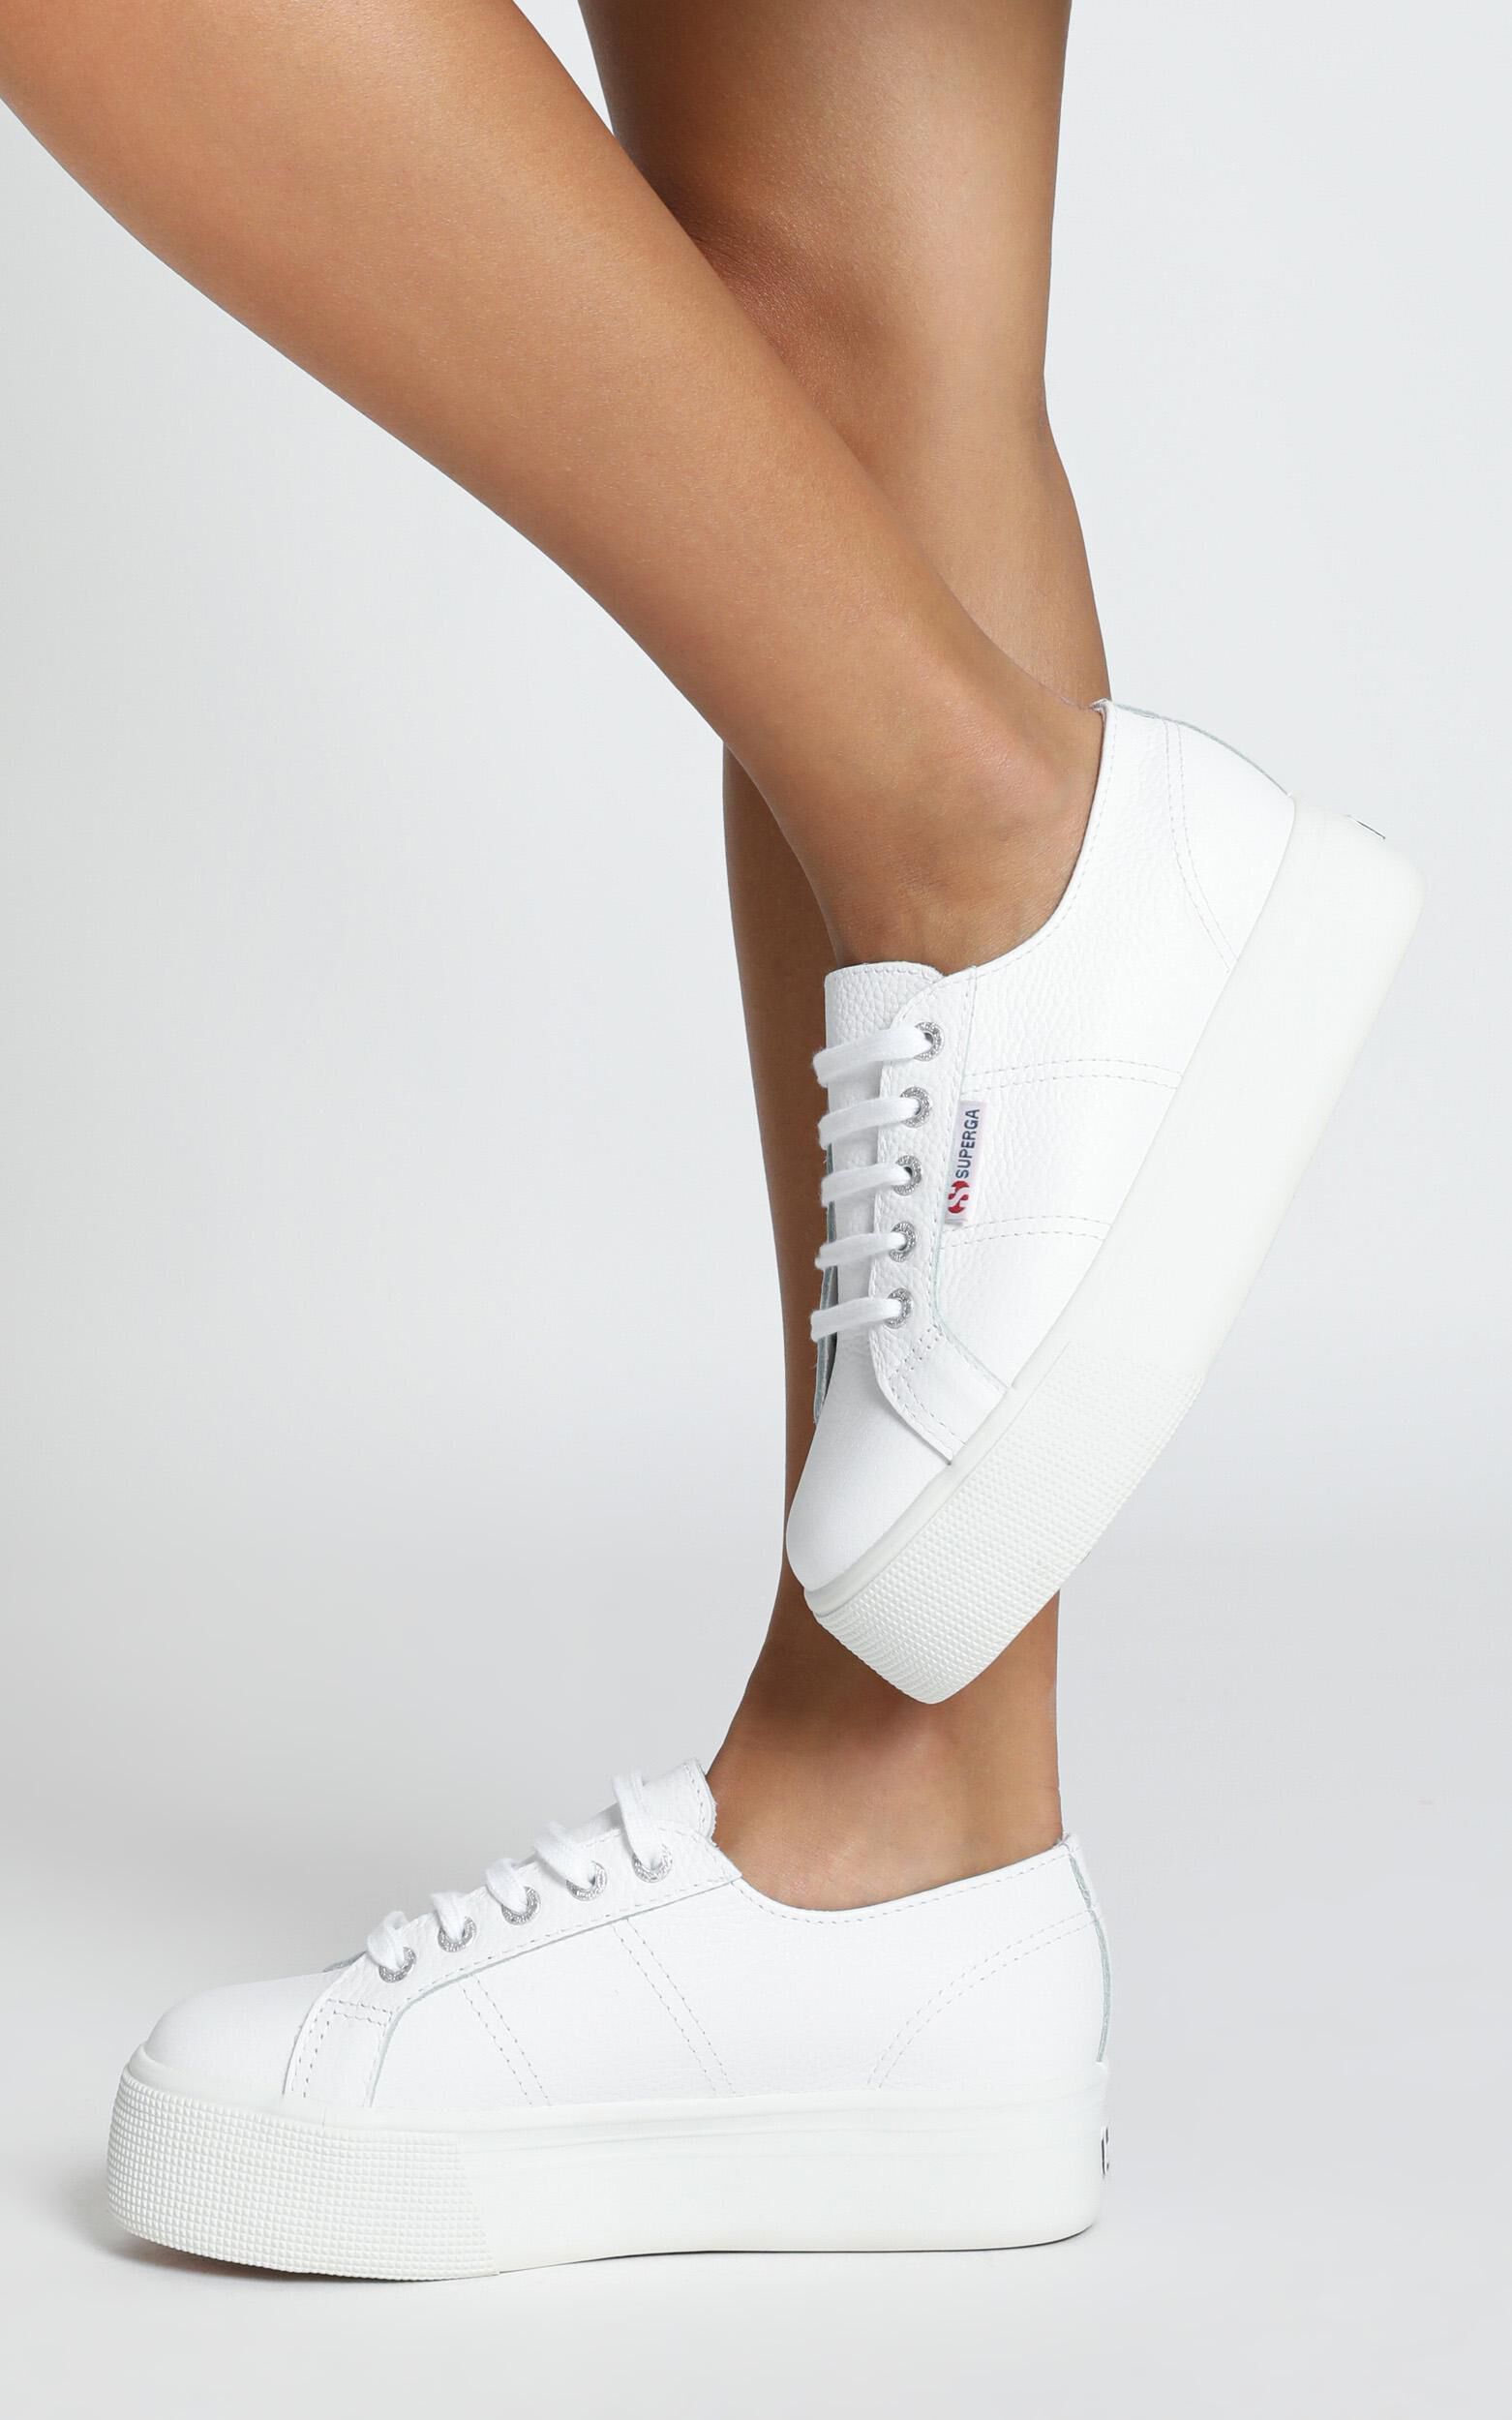 superga white leather platform sneakers